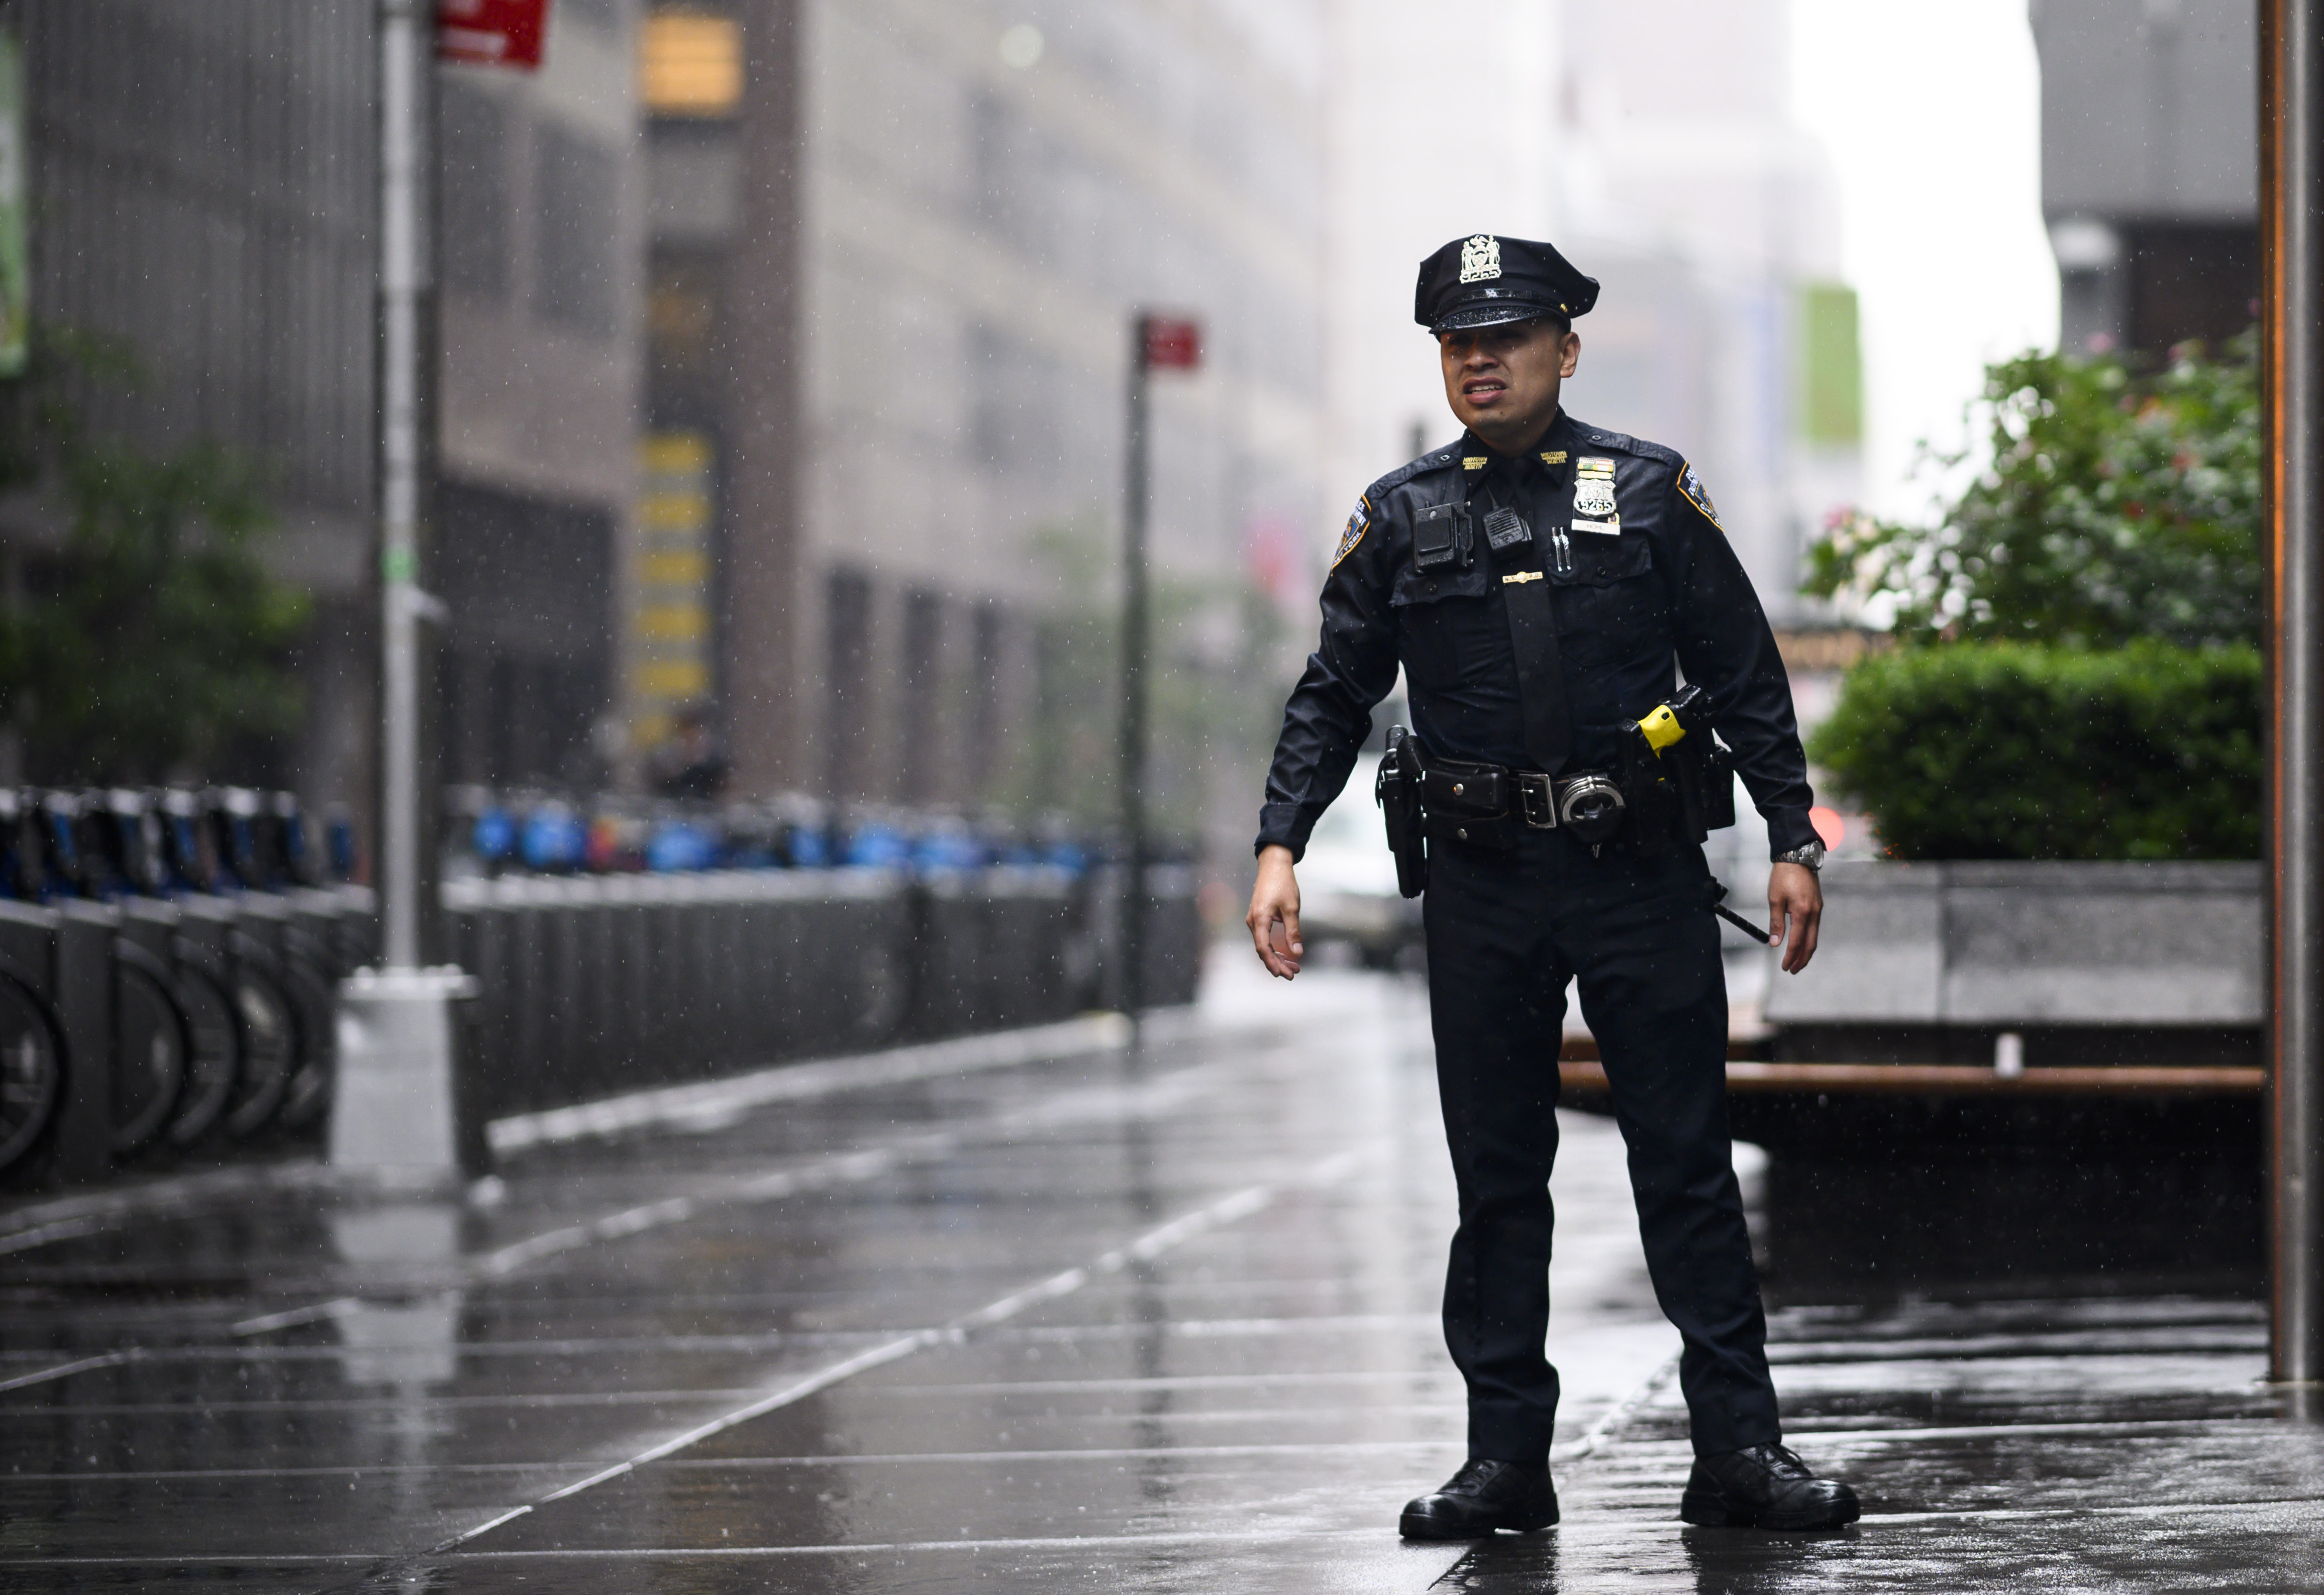 Policeman swear. NYPD Police униформа. Мем полис. Полицейский офицер. Форма полиции Нью-Йорка.